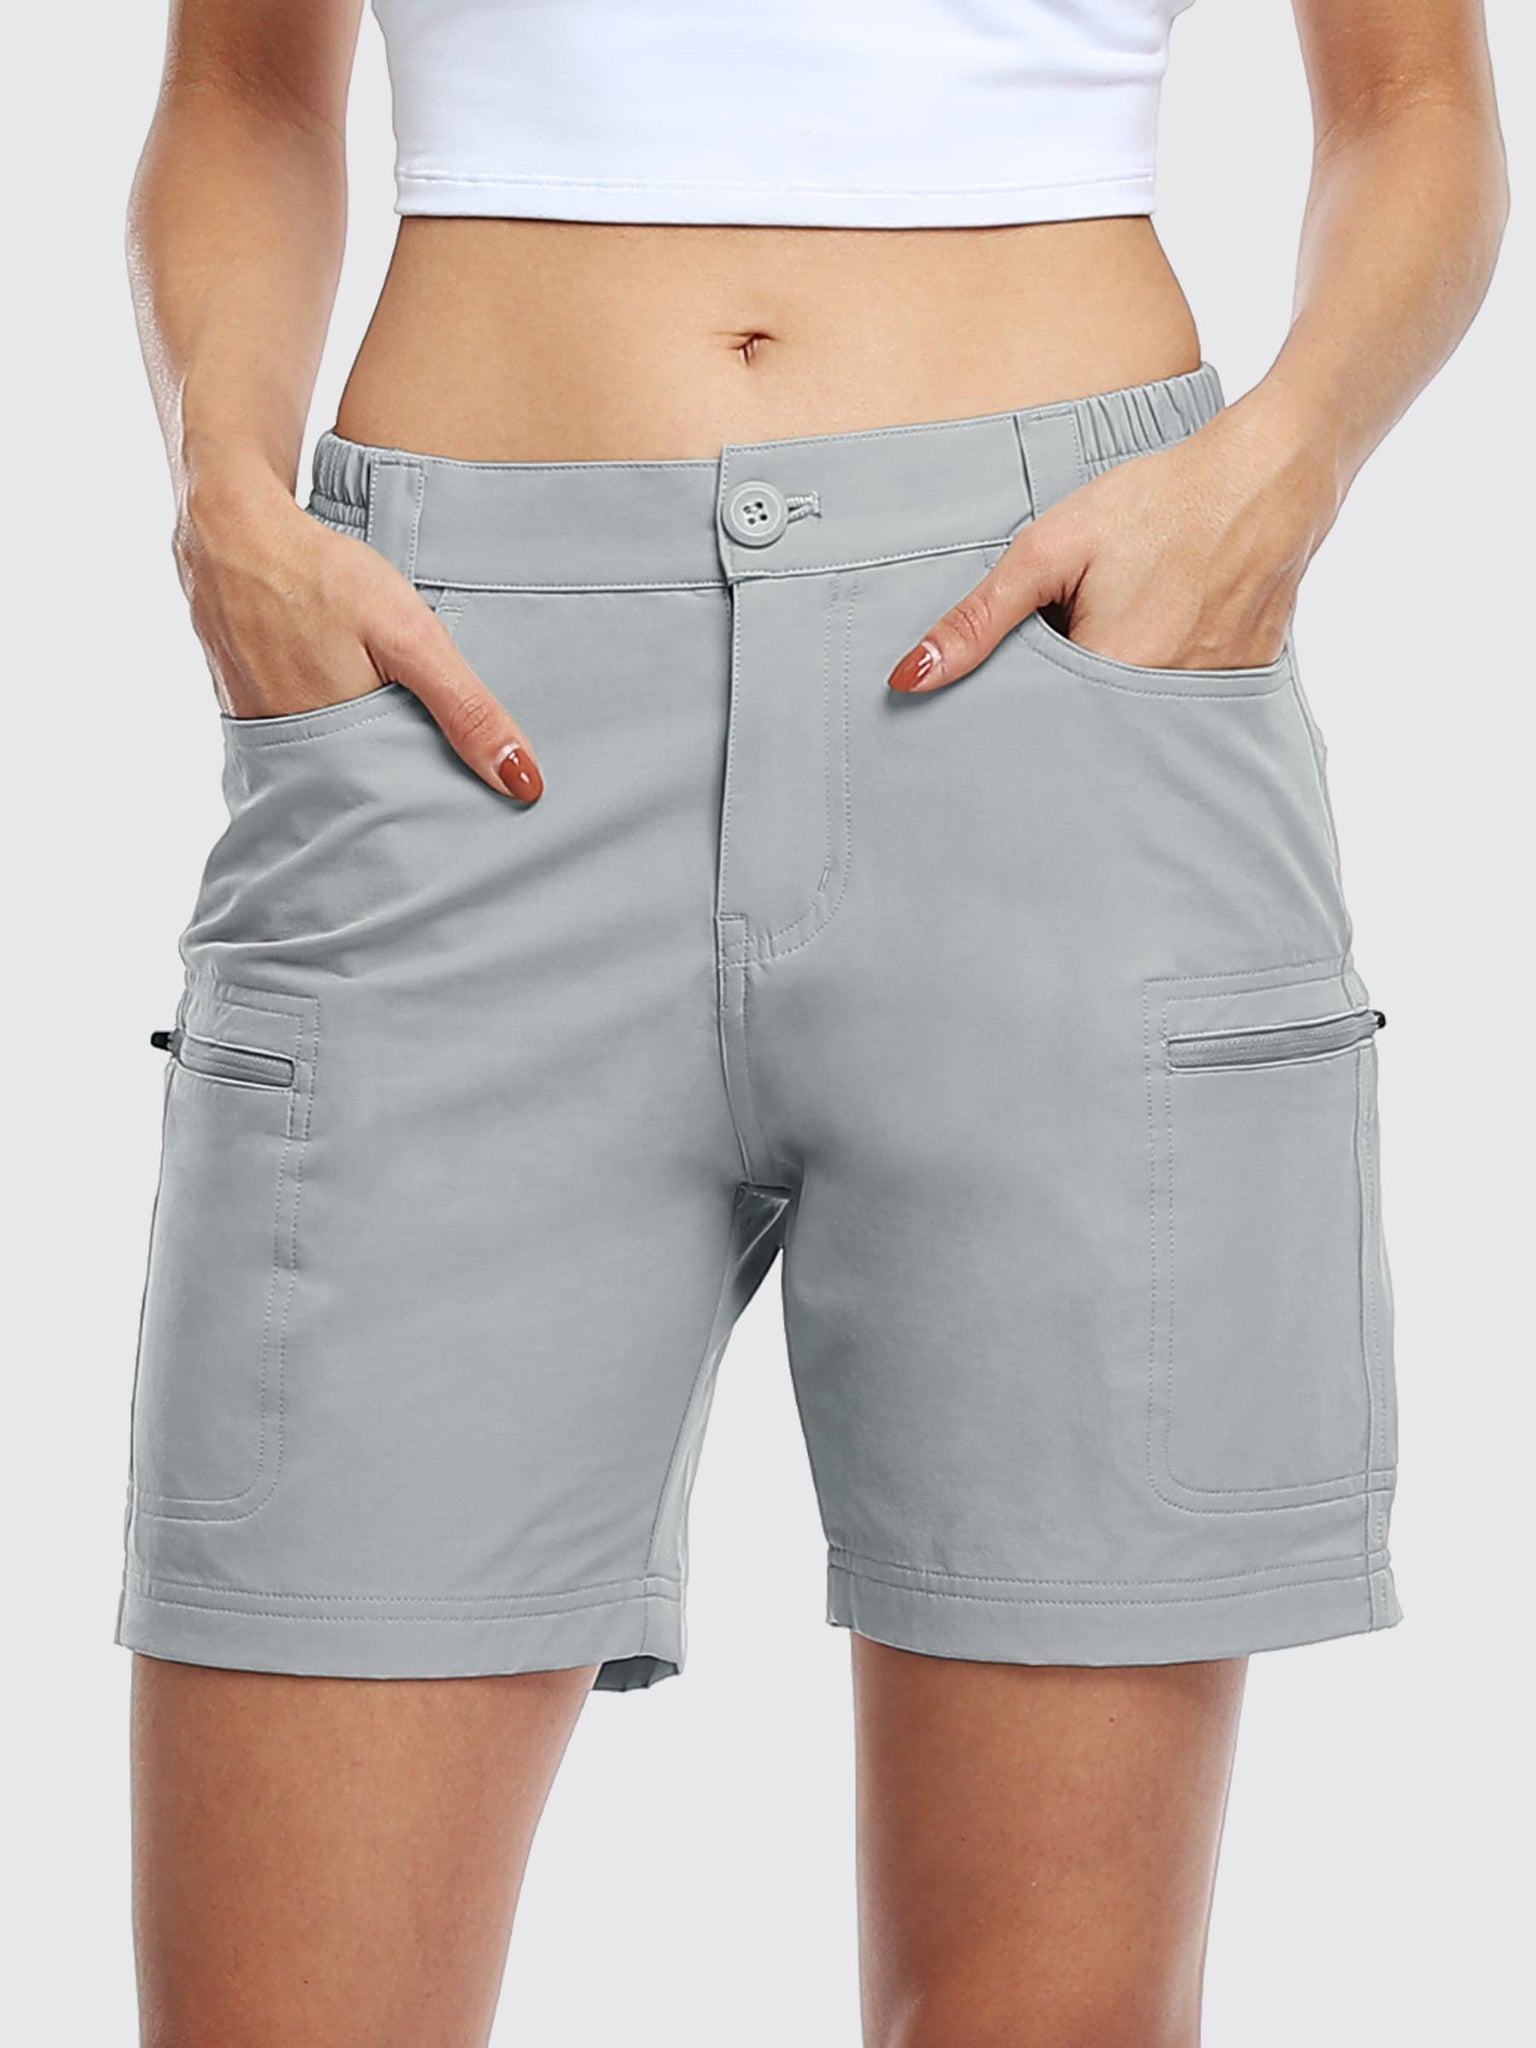 Willit Women's Outdoor Cargo Shorts 6 Inseam_LightGray_model1